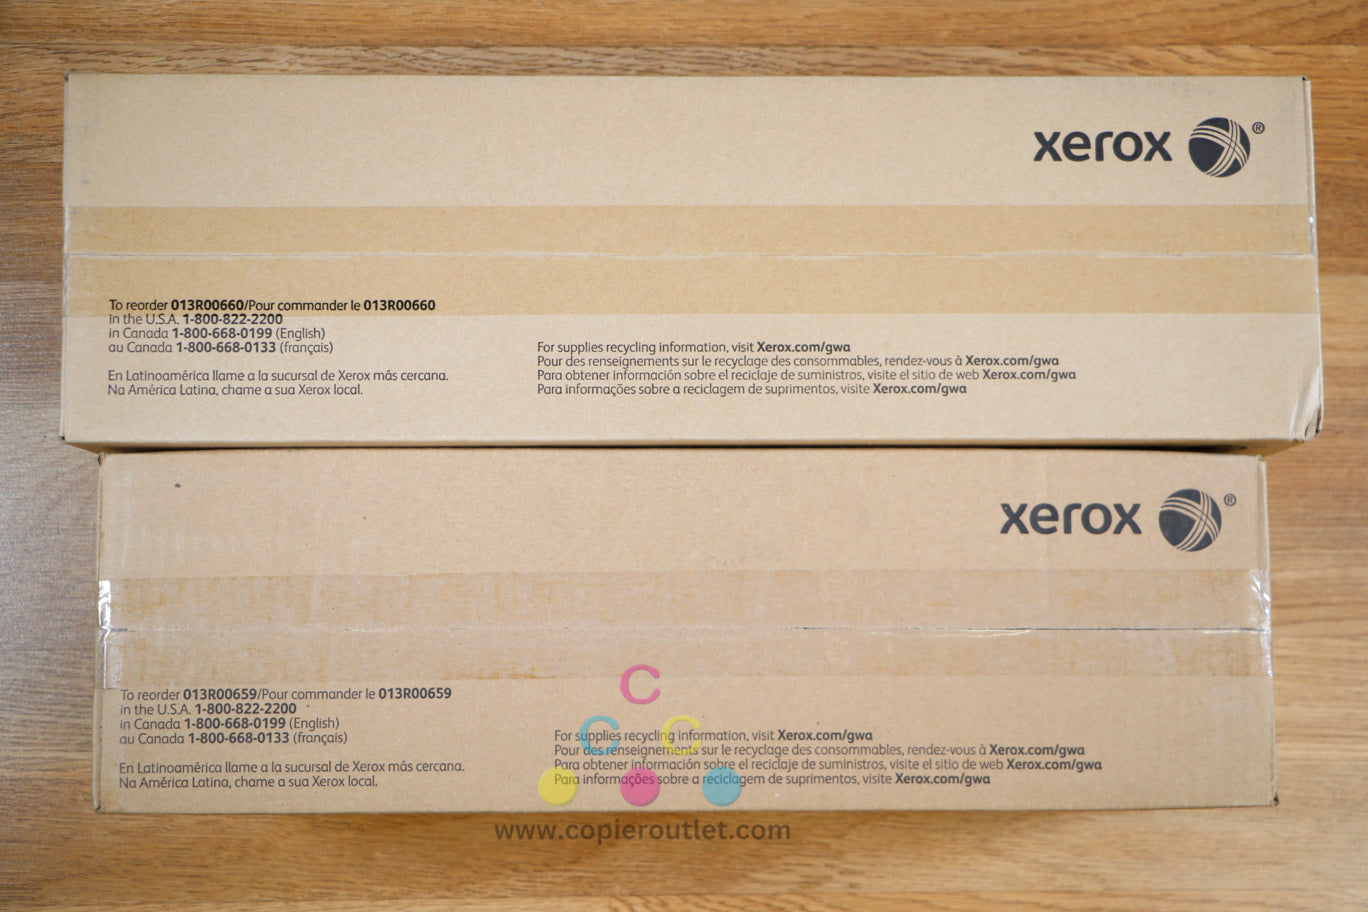 Xerox CM Color Drum Carts WC 7120 7125 7220 7225 7220i 7225i 013R00659 013R00660